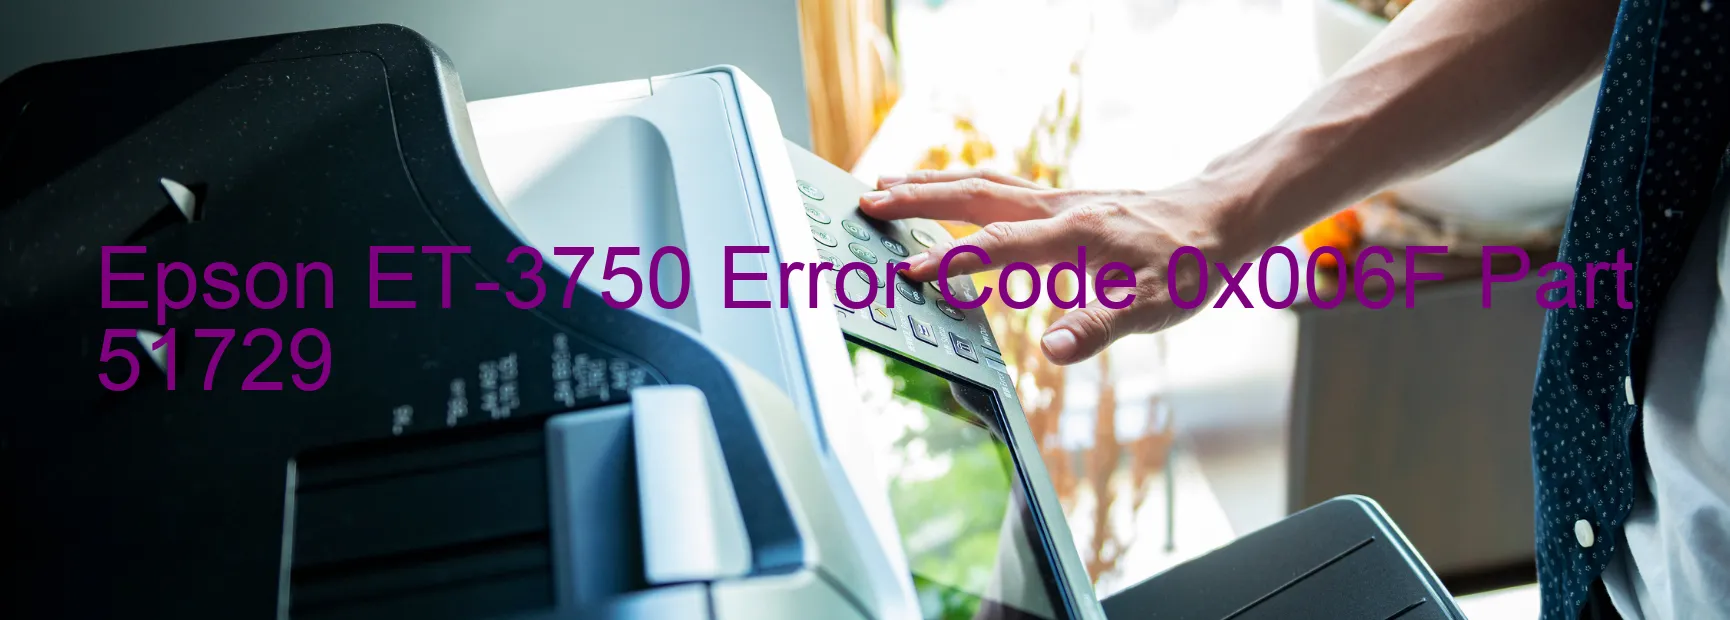 Epson ET-3750 Error Code 0x006F Part 51729